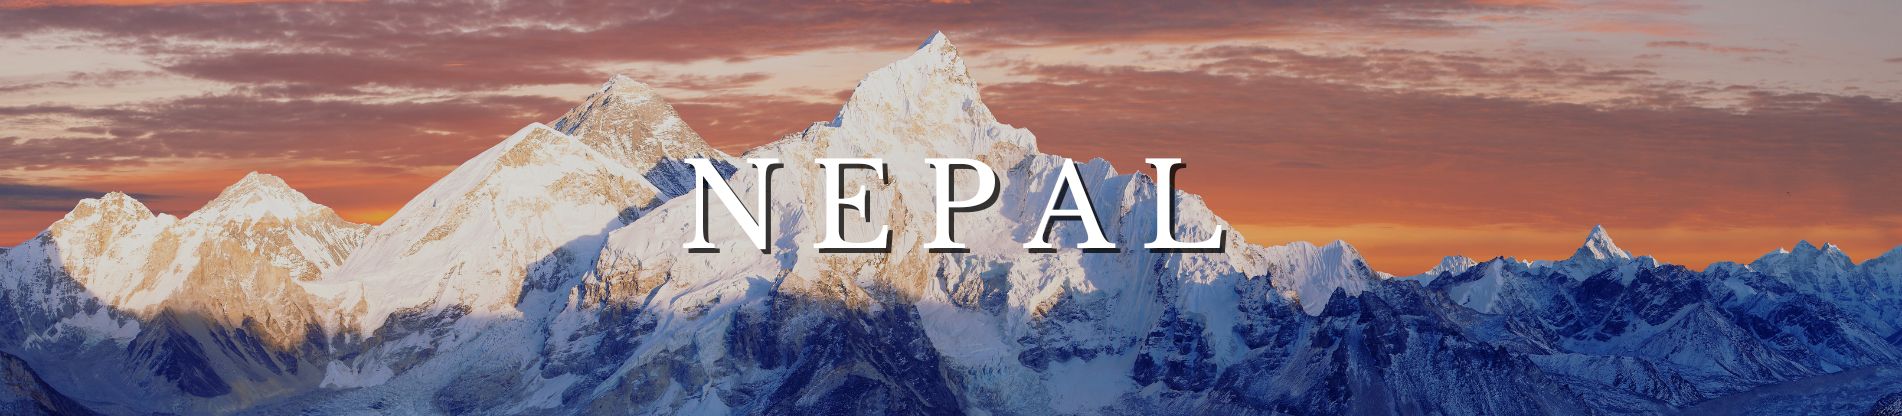 Banner Pacotes para Nepal